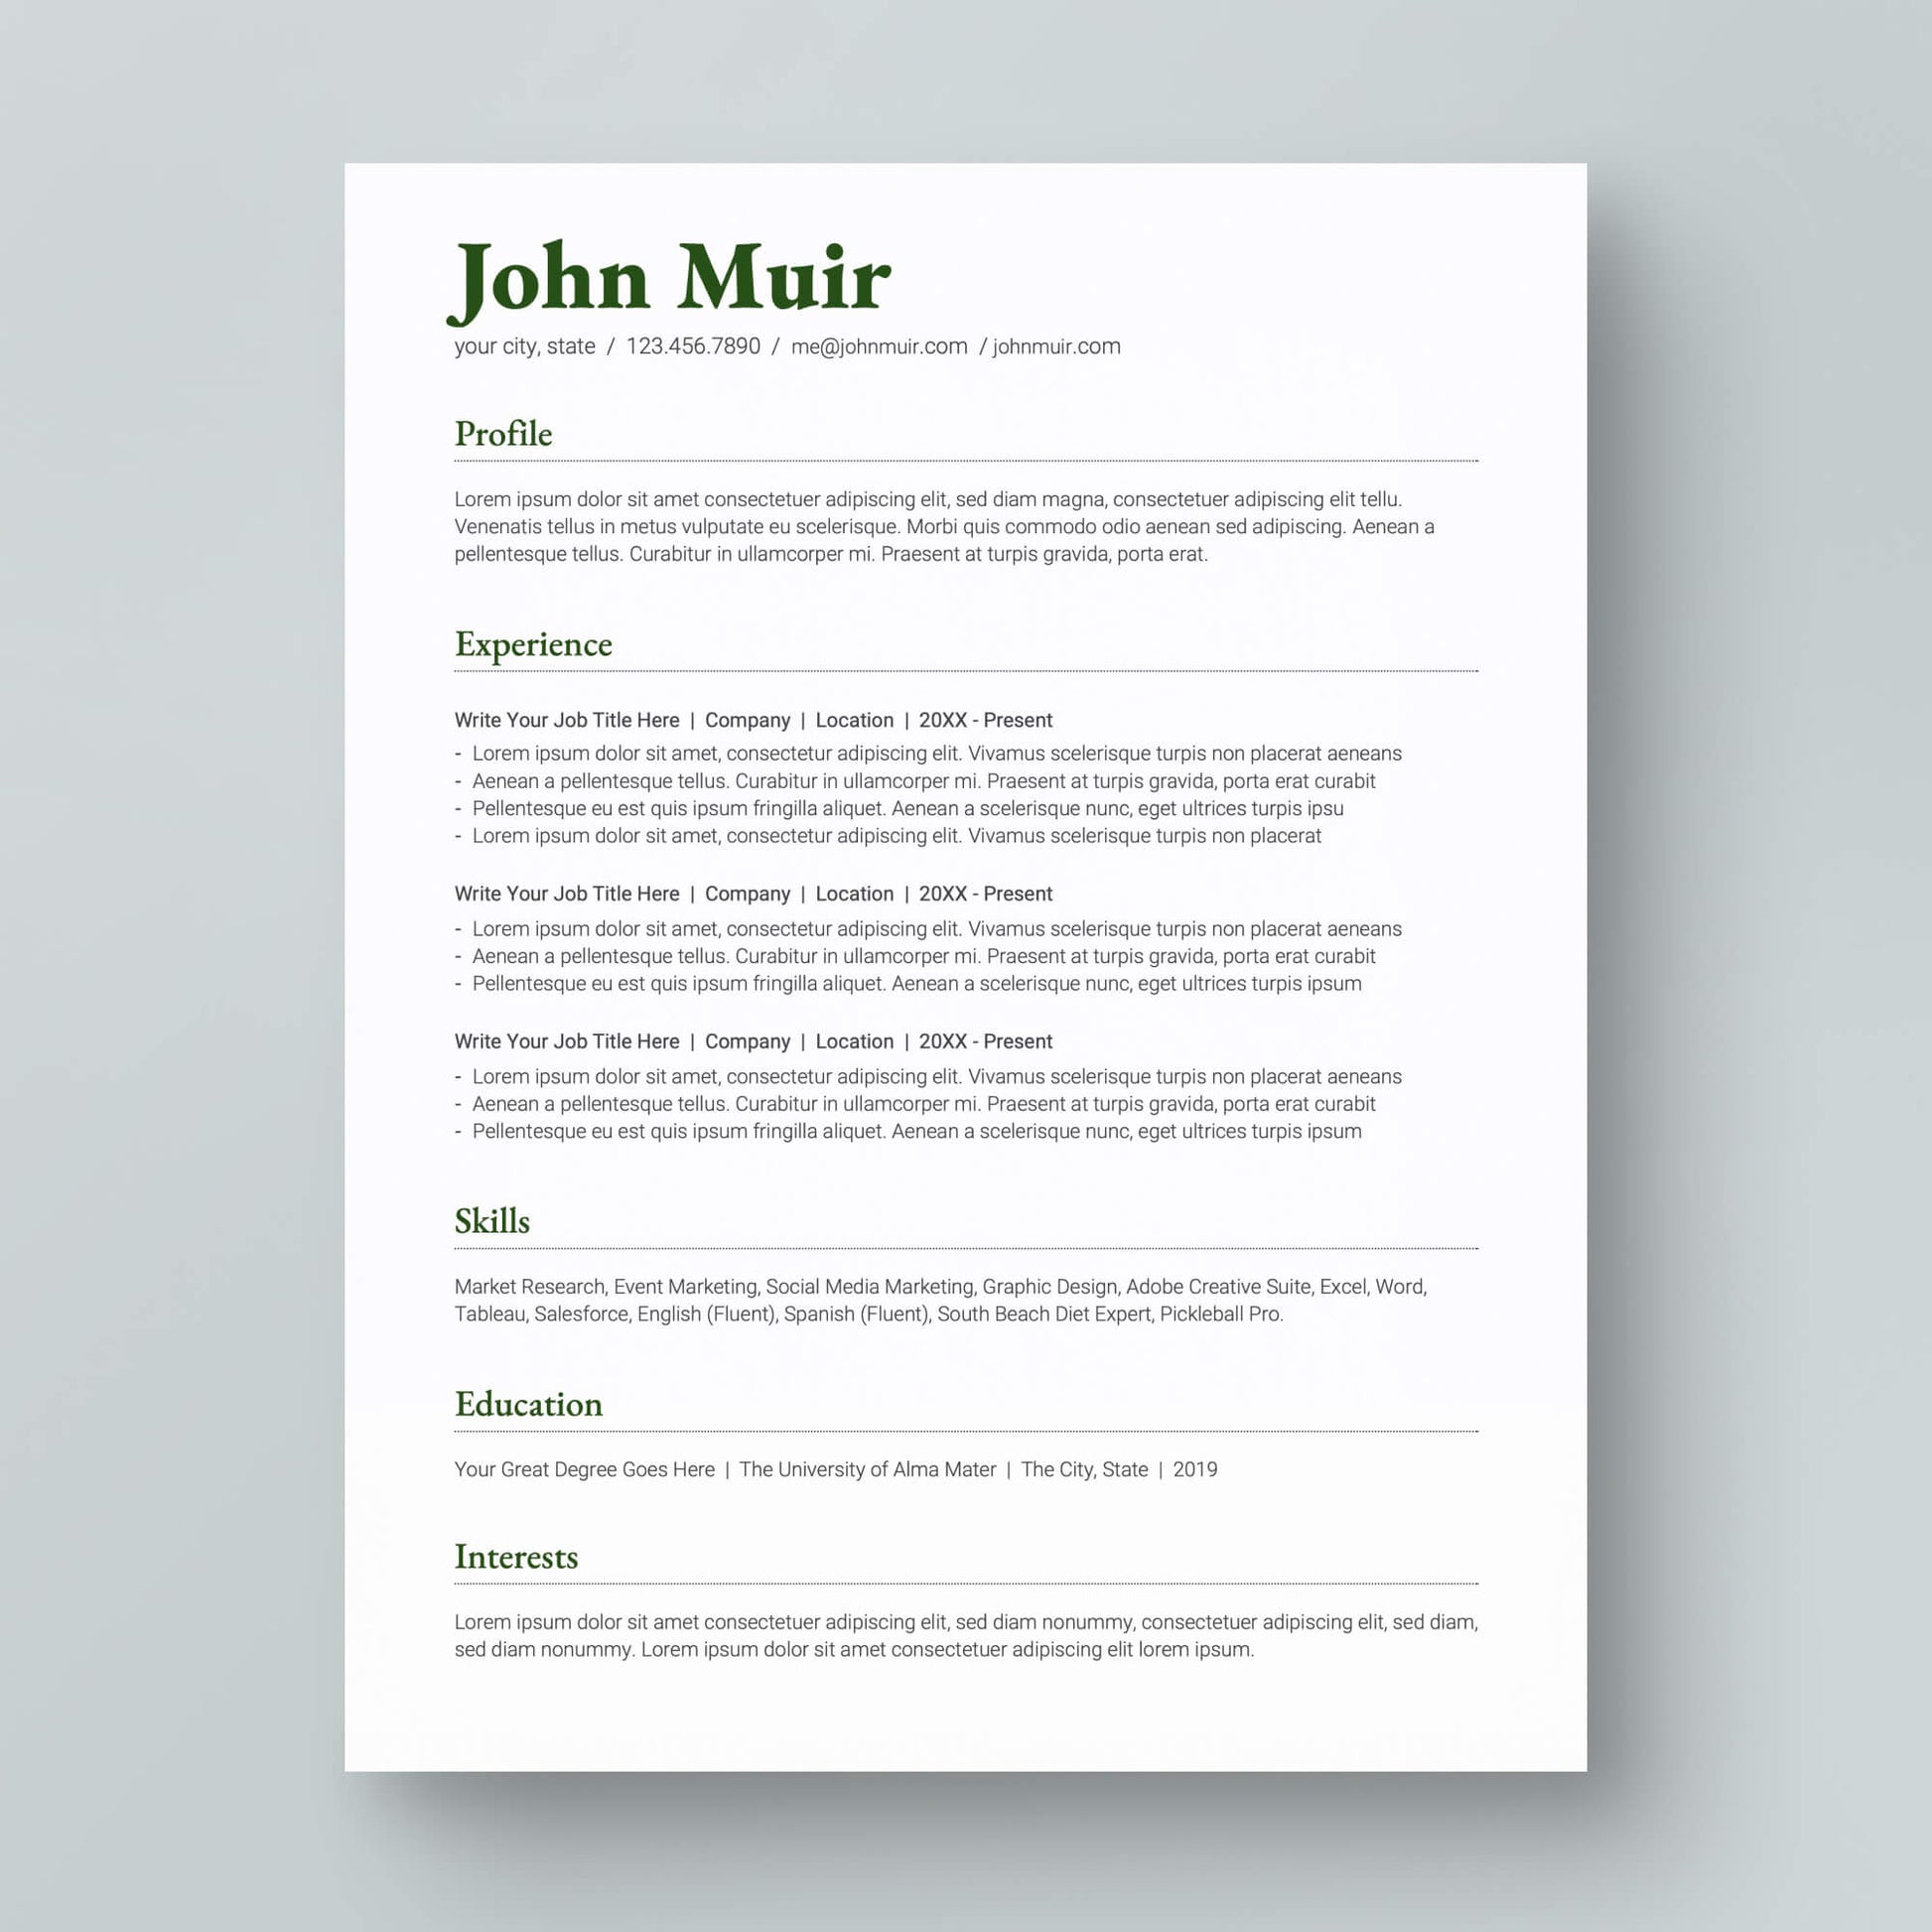 Resume Template: John Muir - MioDocs